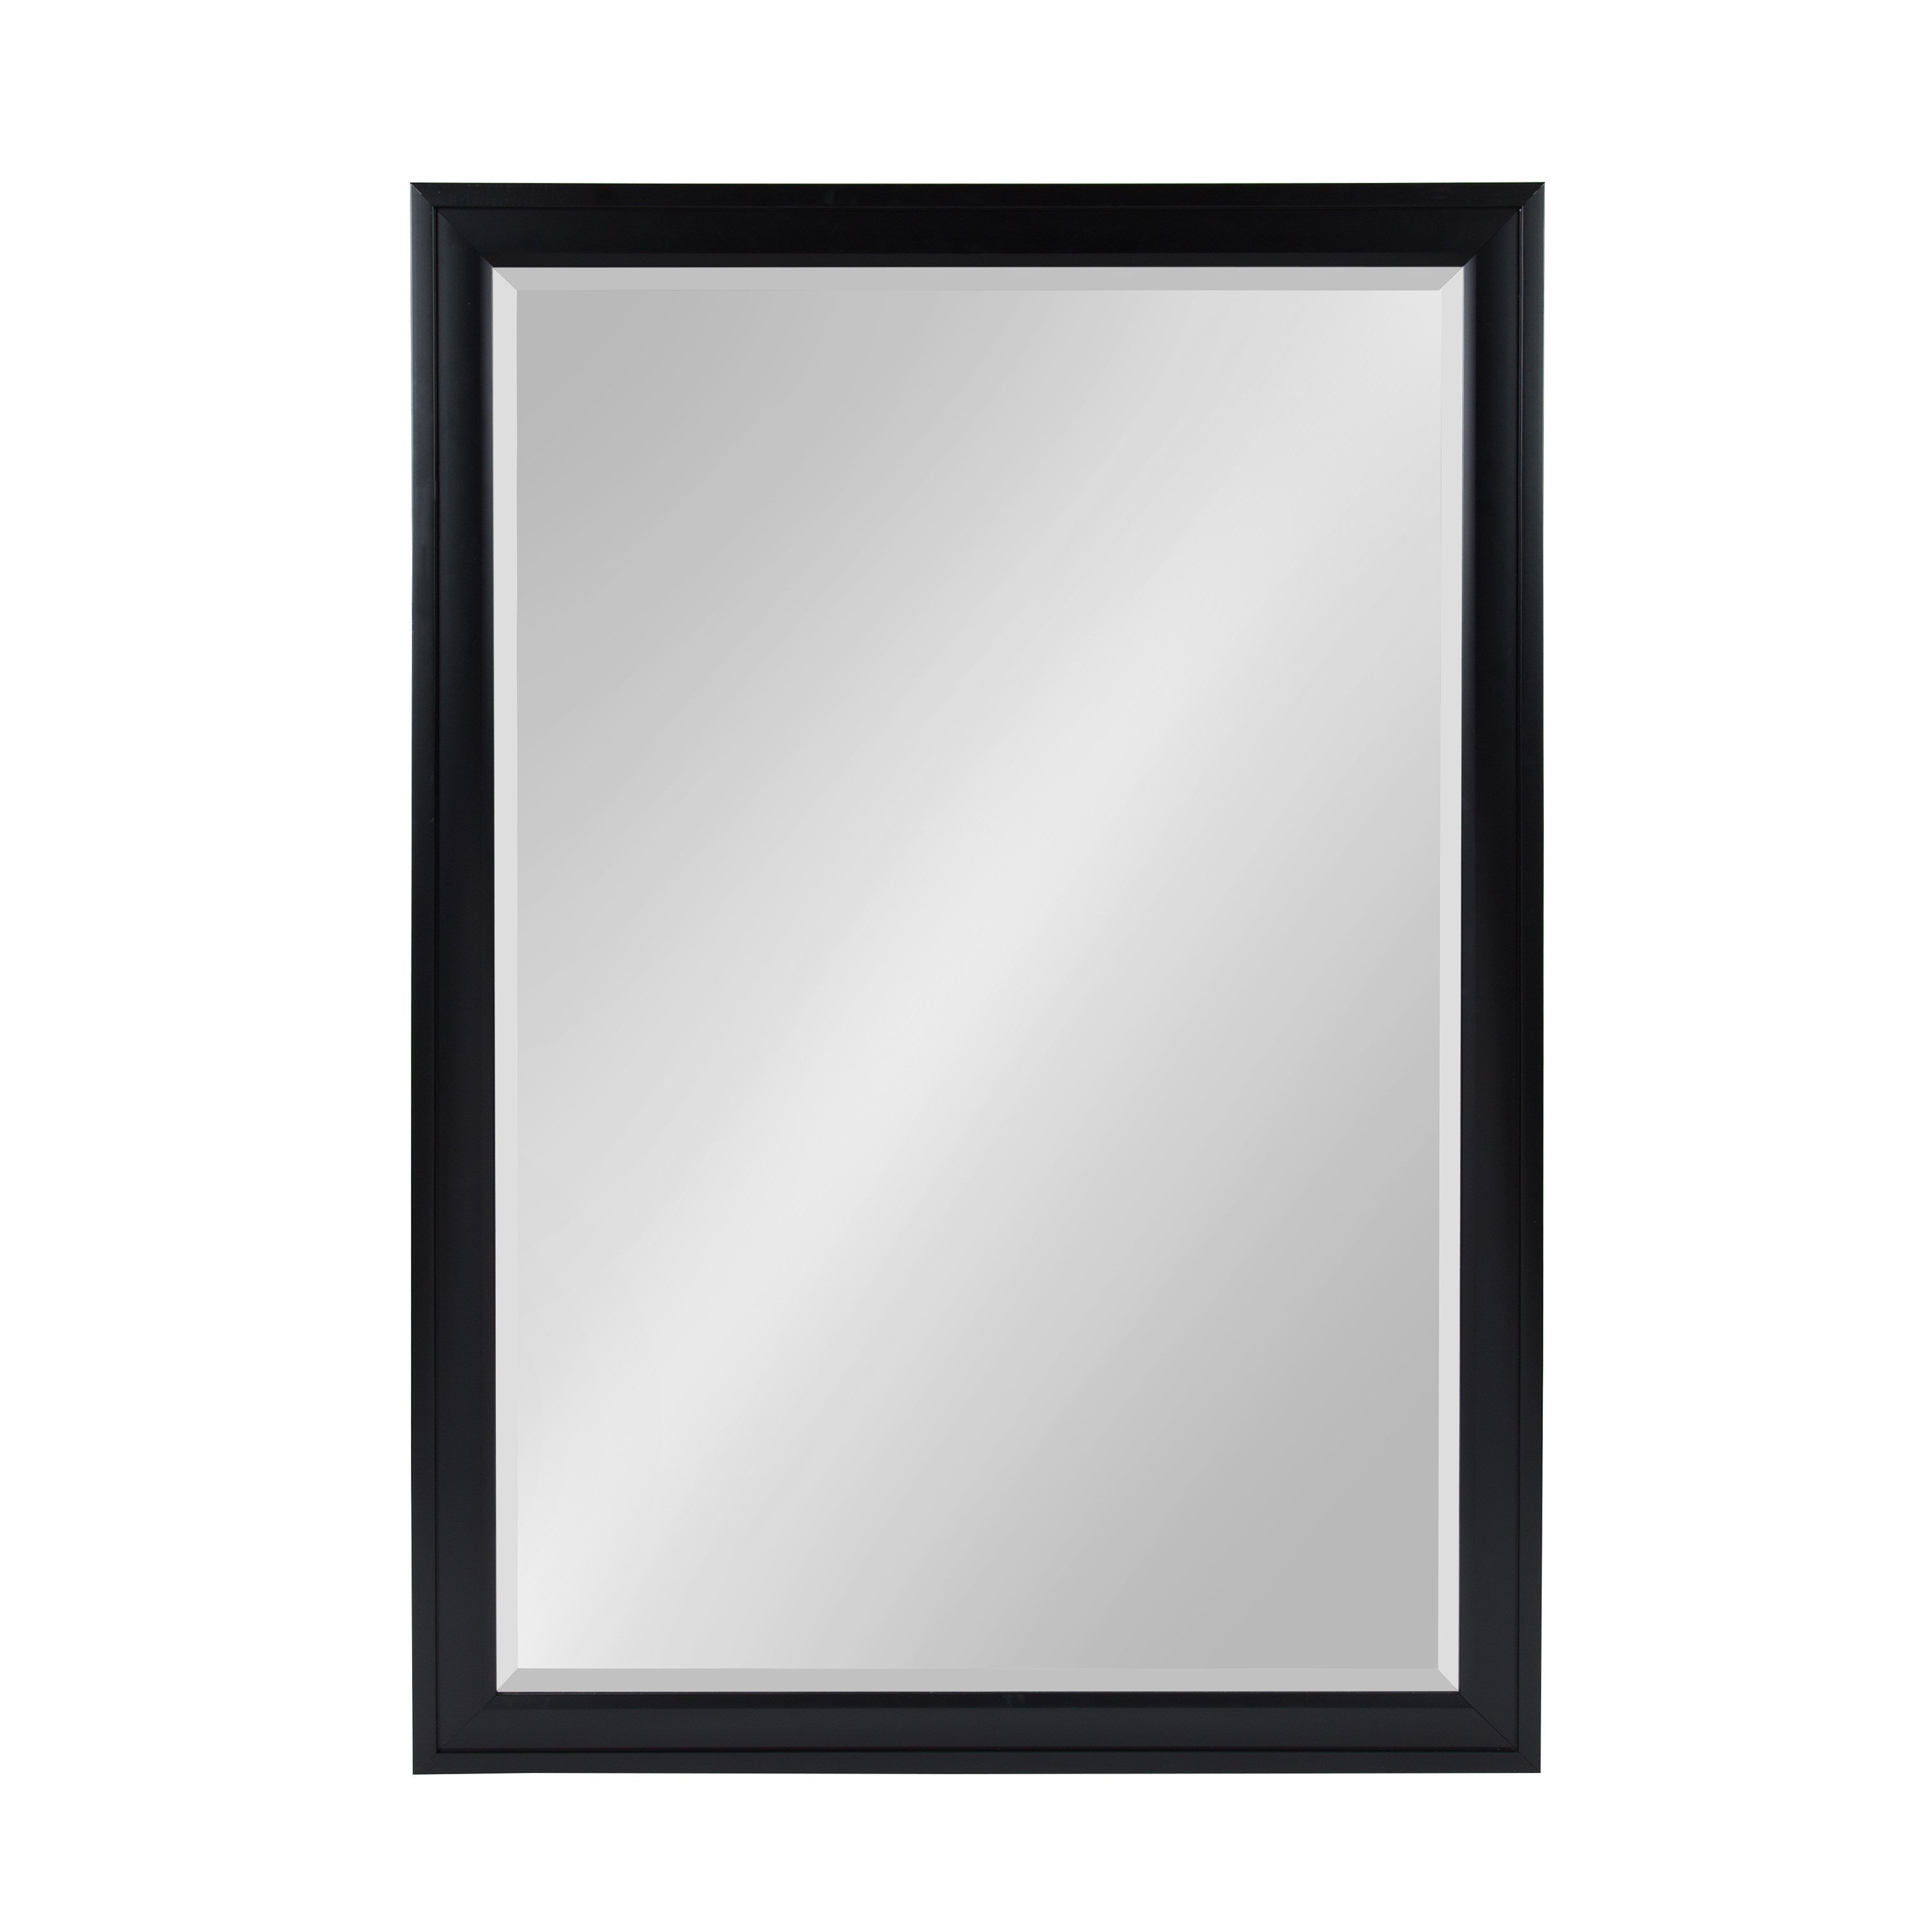 Bosc Framed Wall Mirror